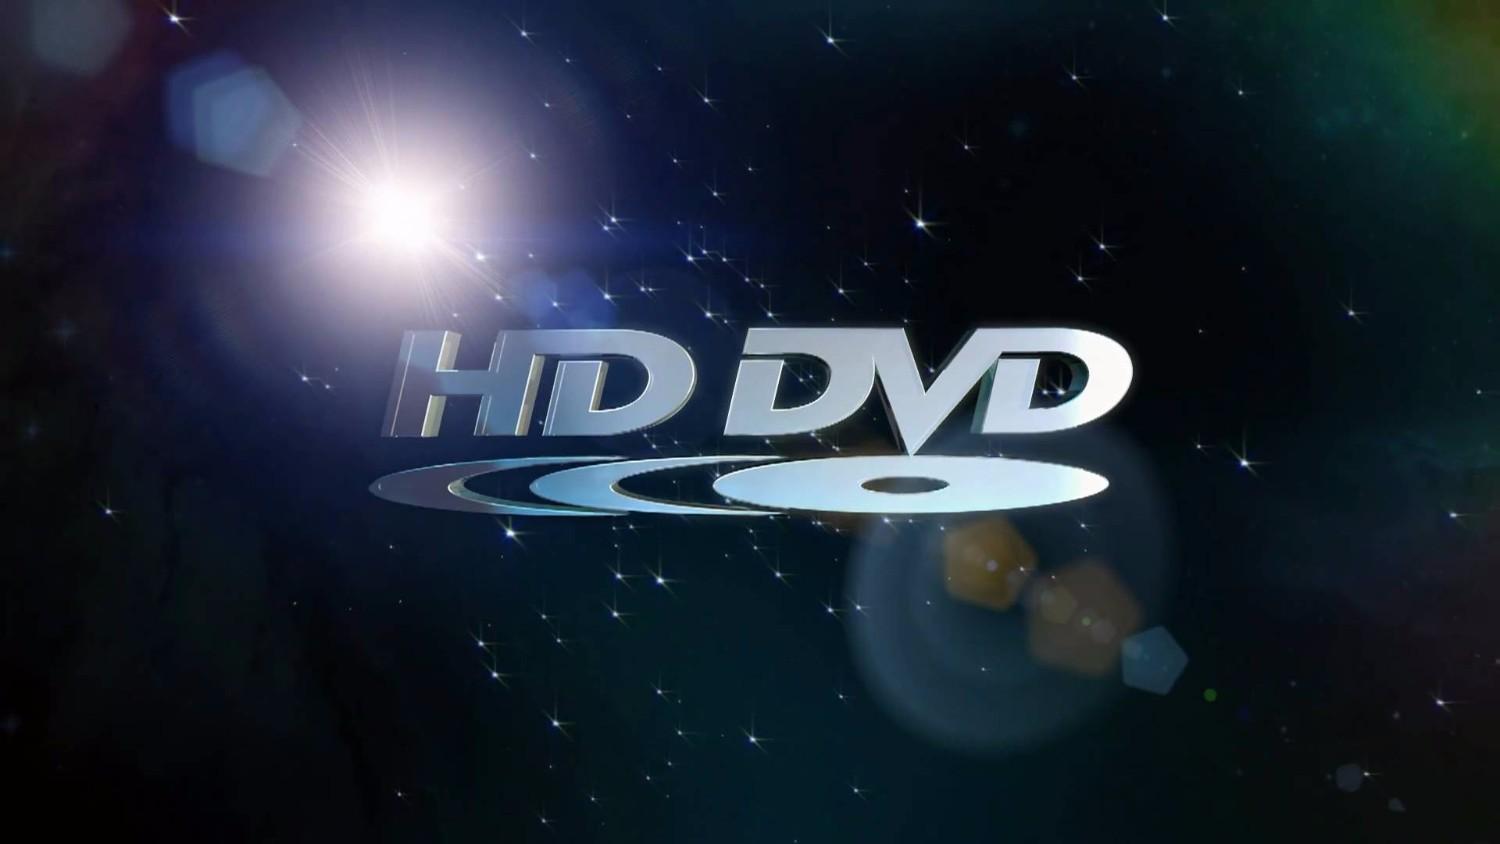 Toshiba HD-DVD HD-D1 Version 4.0 Firmware - Physical CD - NEW - UK SELLER